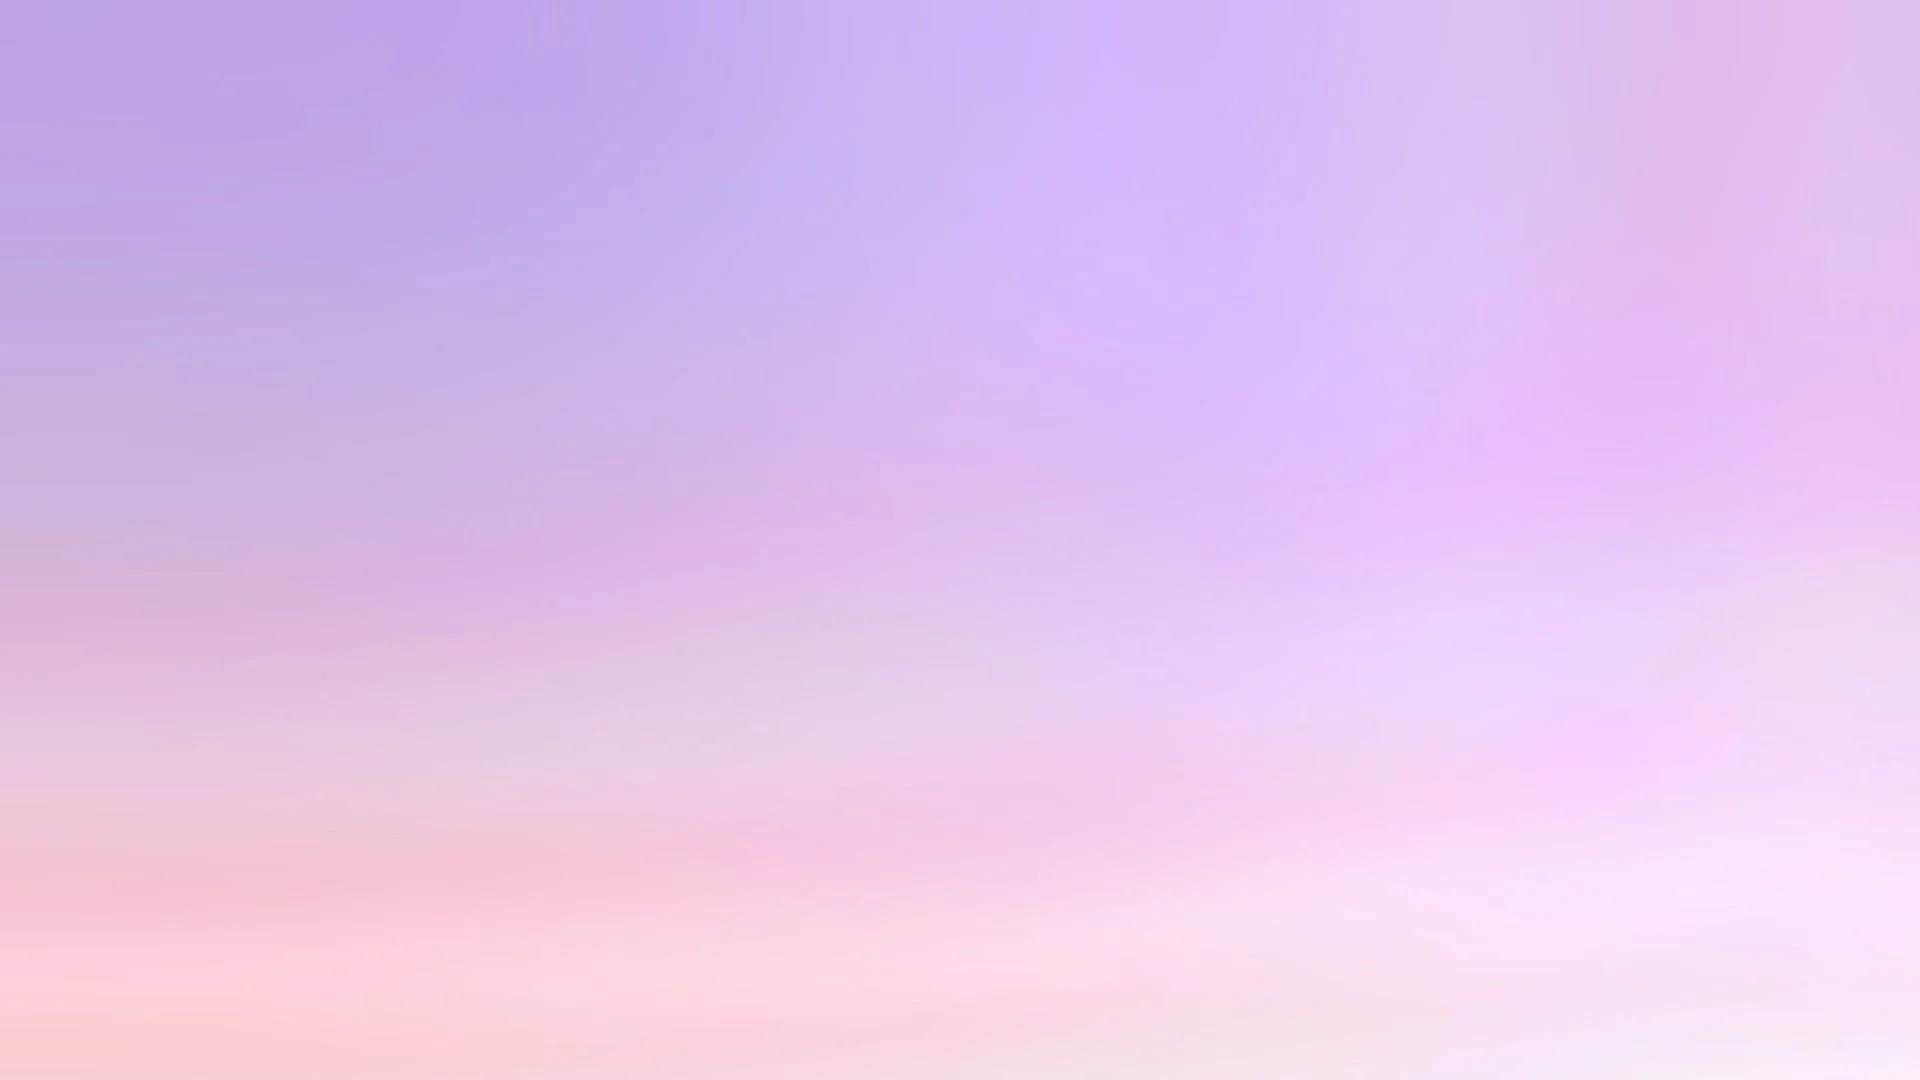 1920x1080 Pink and Purple Desktop Wallpapers Top Free Pink and Purple Desktop Backgrounds